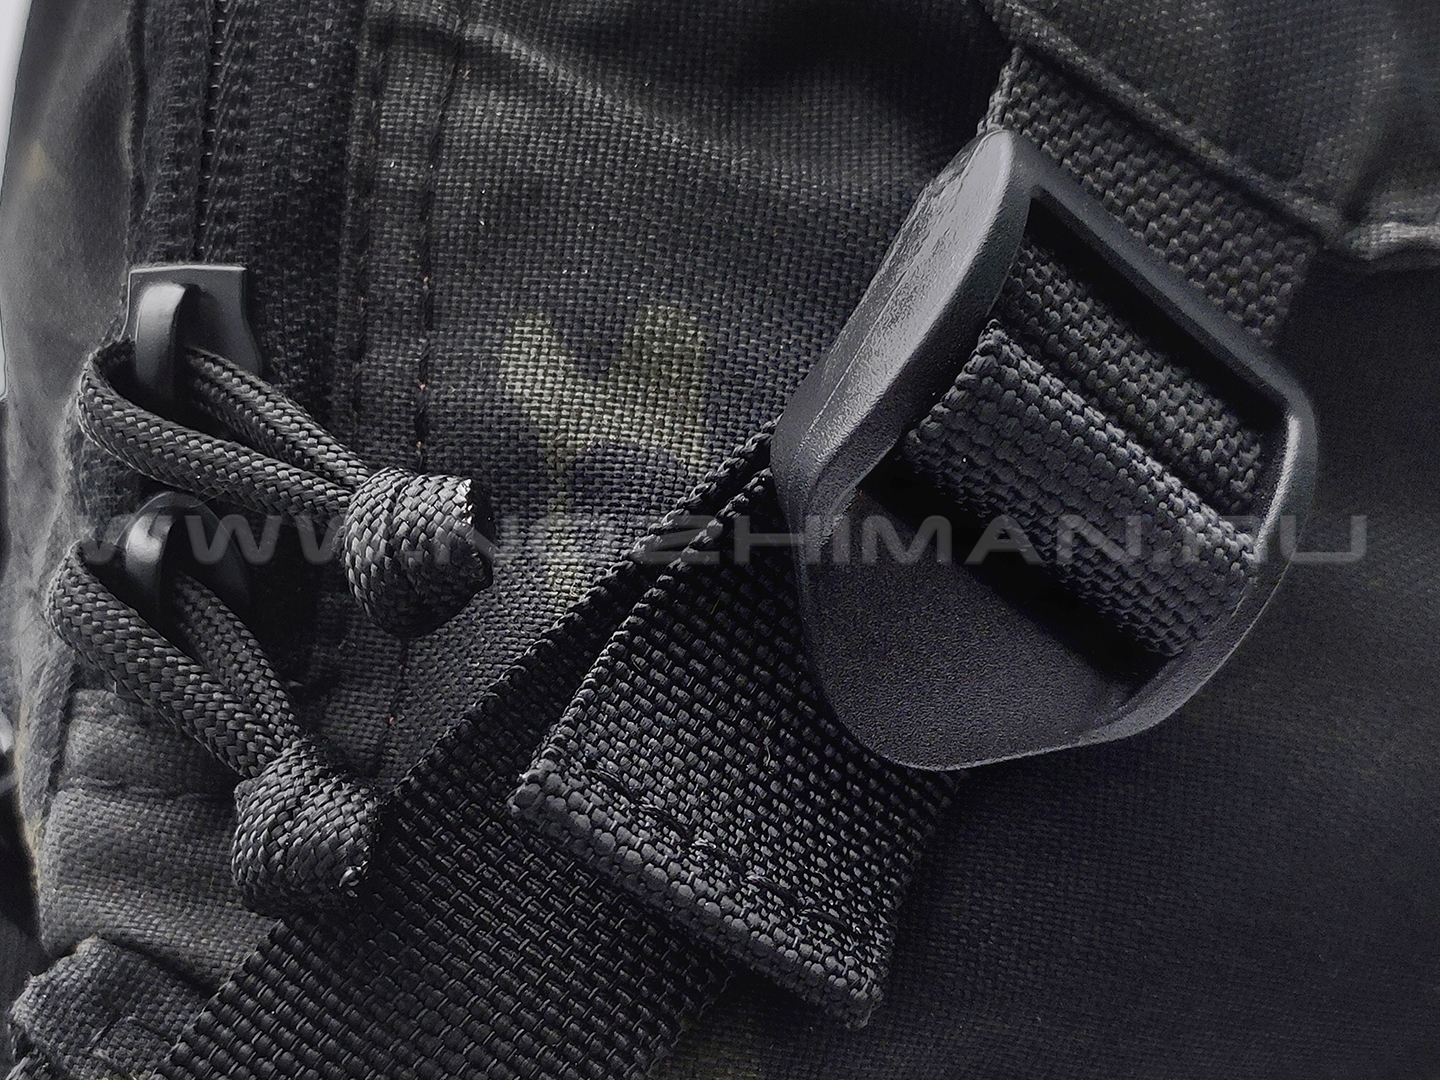 Дяг поясная сумка Hipbag nylon L multicam black, велкро с молле